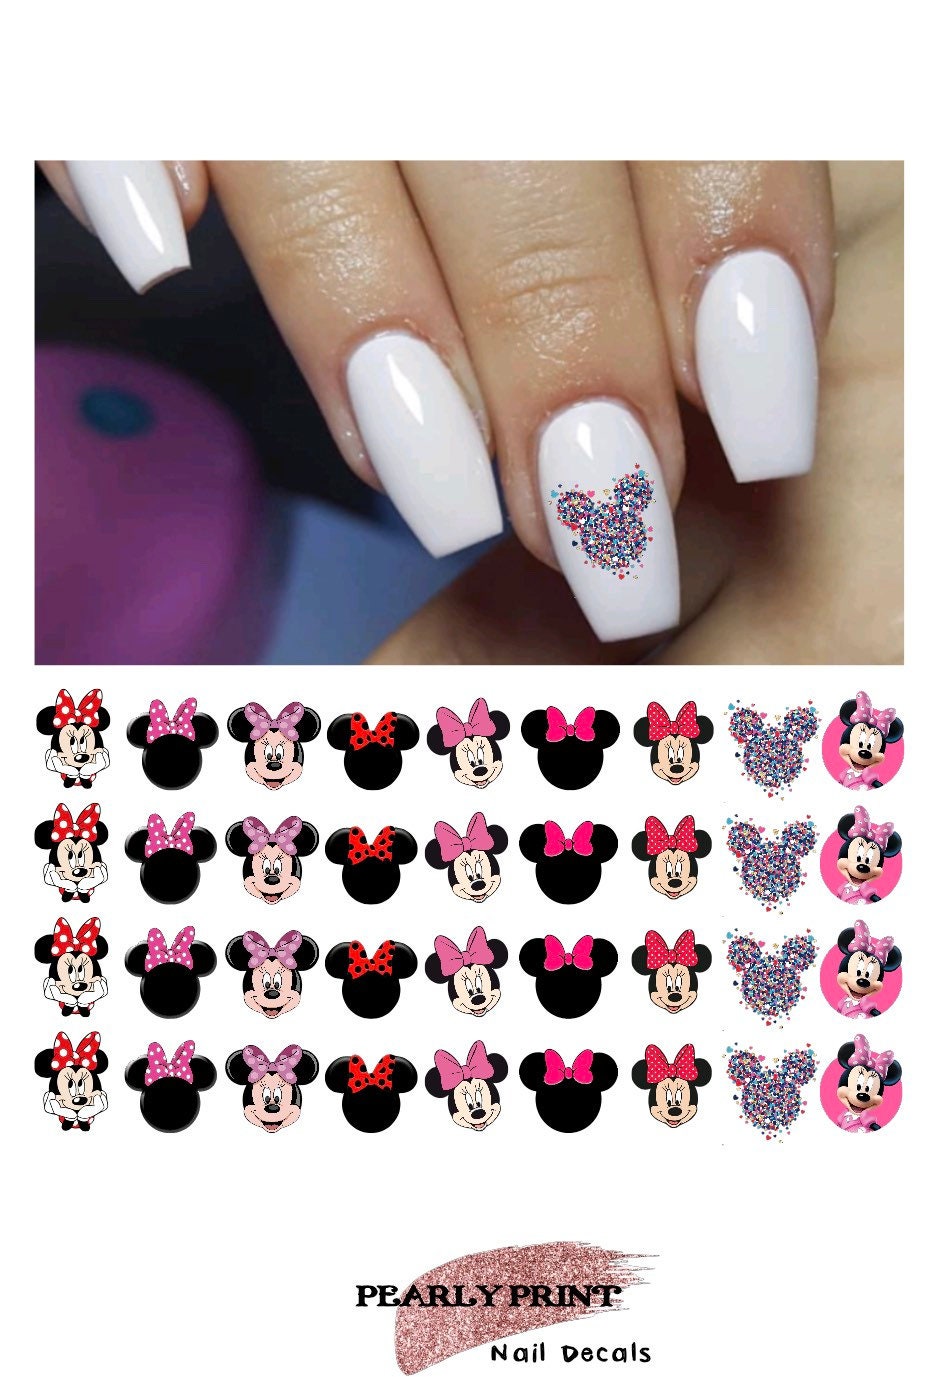 Dibujos Animados Cute Nail pegatinas para niños Mickey's Nails Art Sticker  - China Baldosa y Cerámica precio